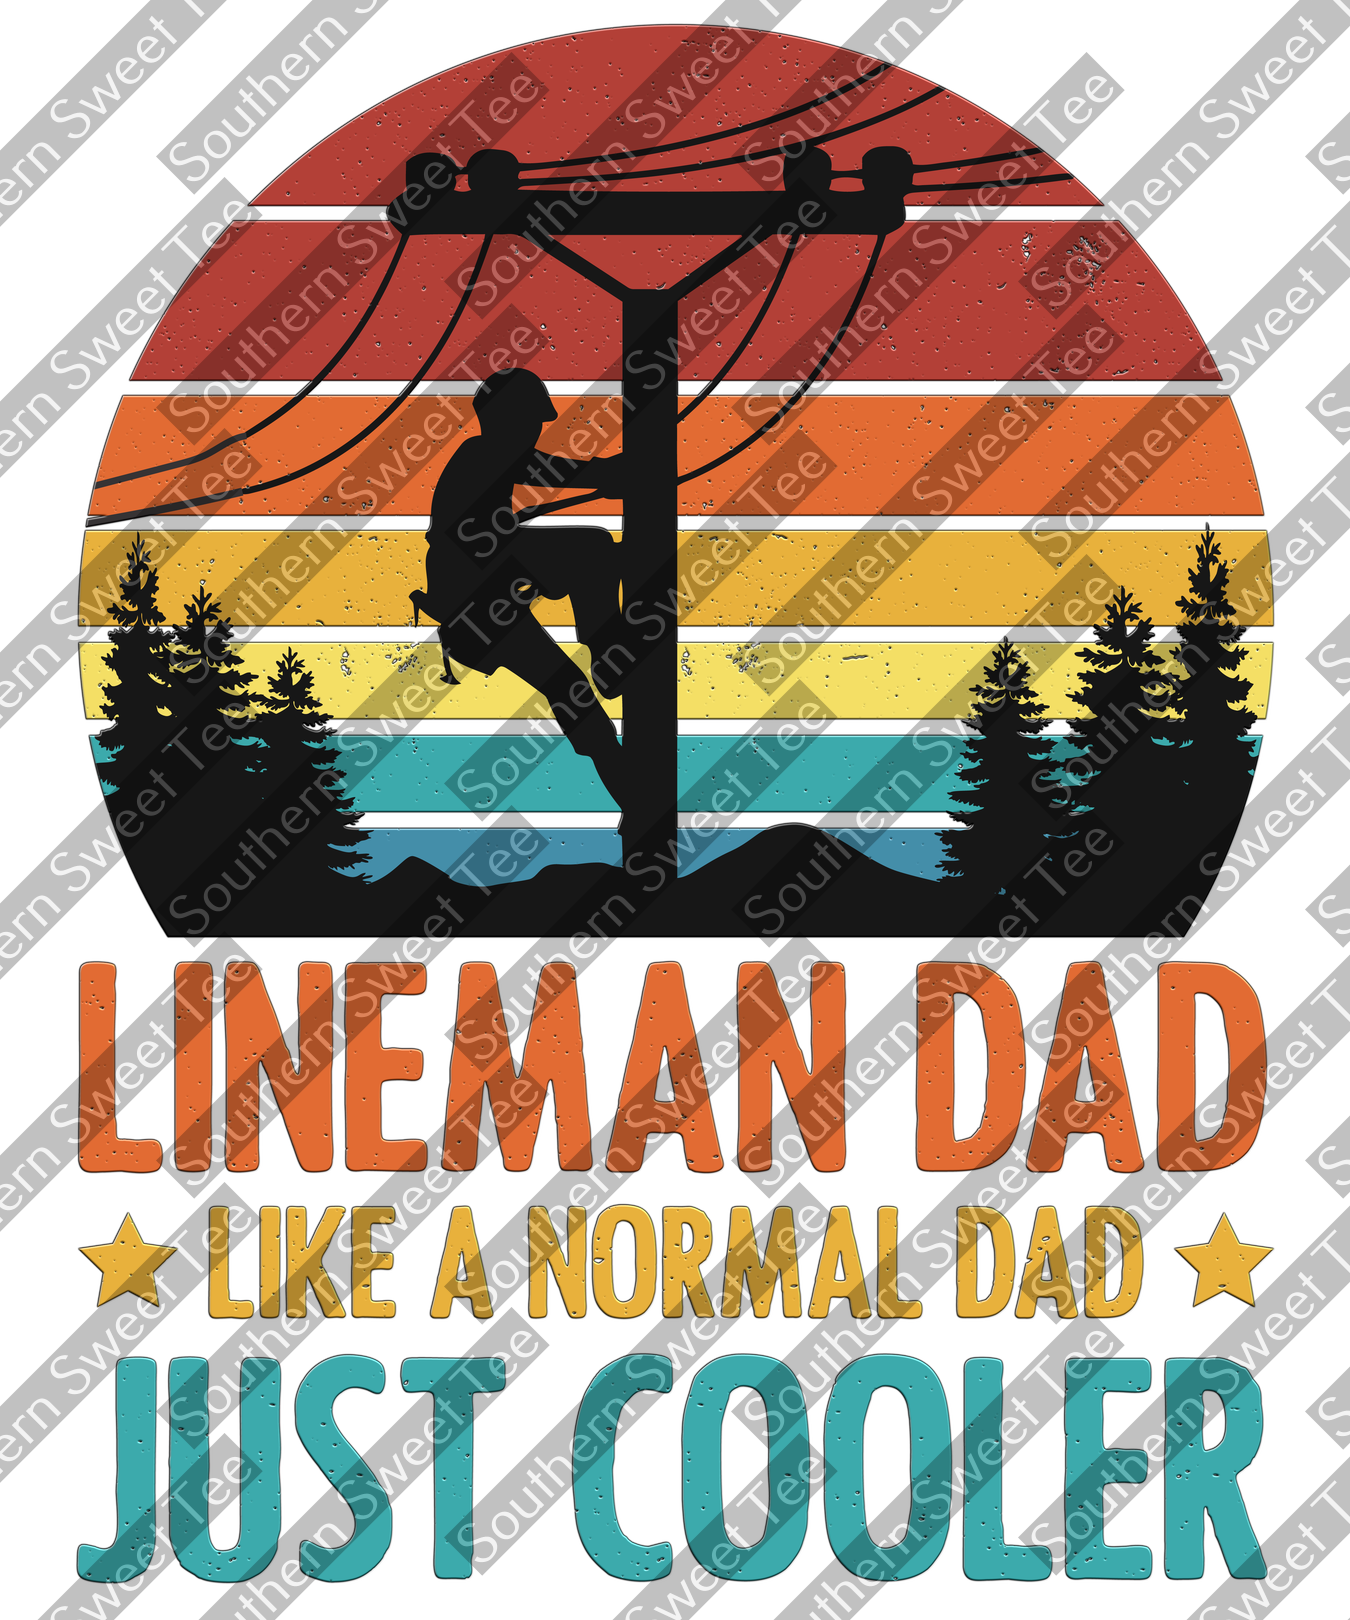 lineman dad just cooler .bnb